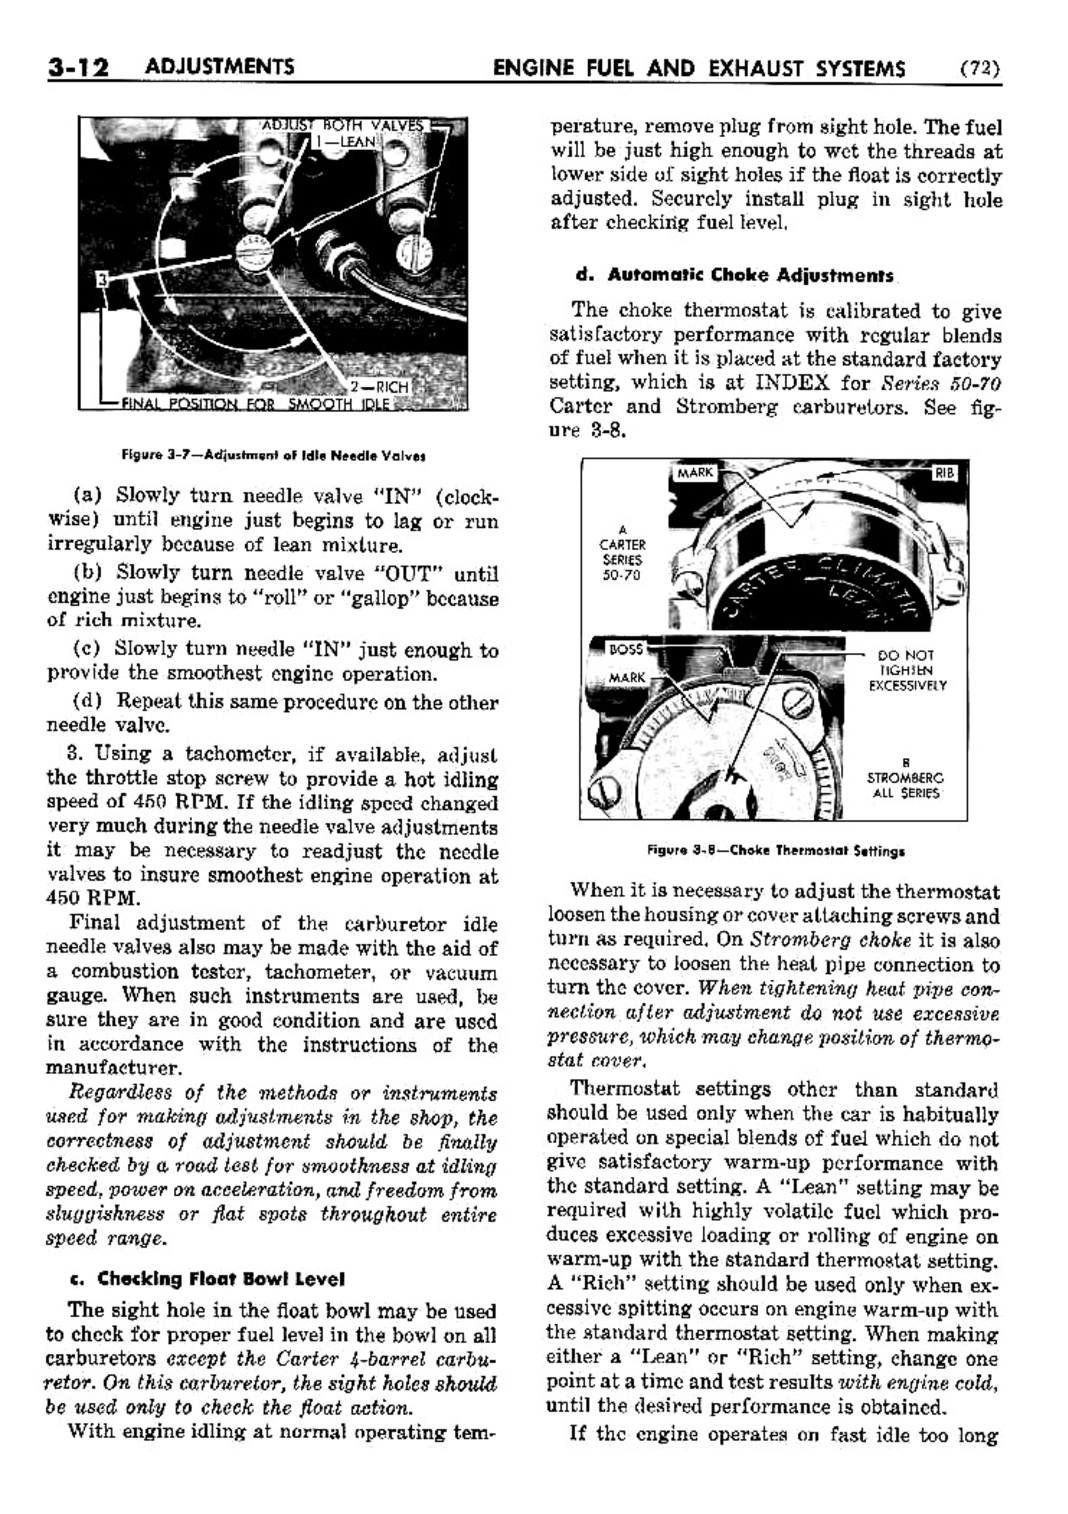 n_04 1953 Buick Shop Manual - Engine Fuel & Exhaust-012-012.jpg